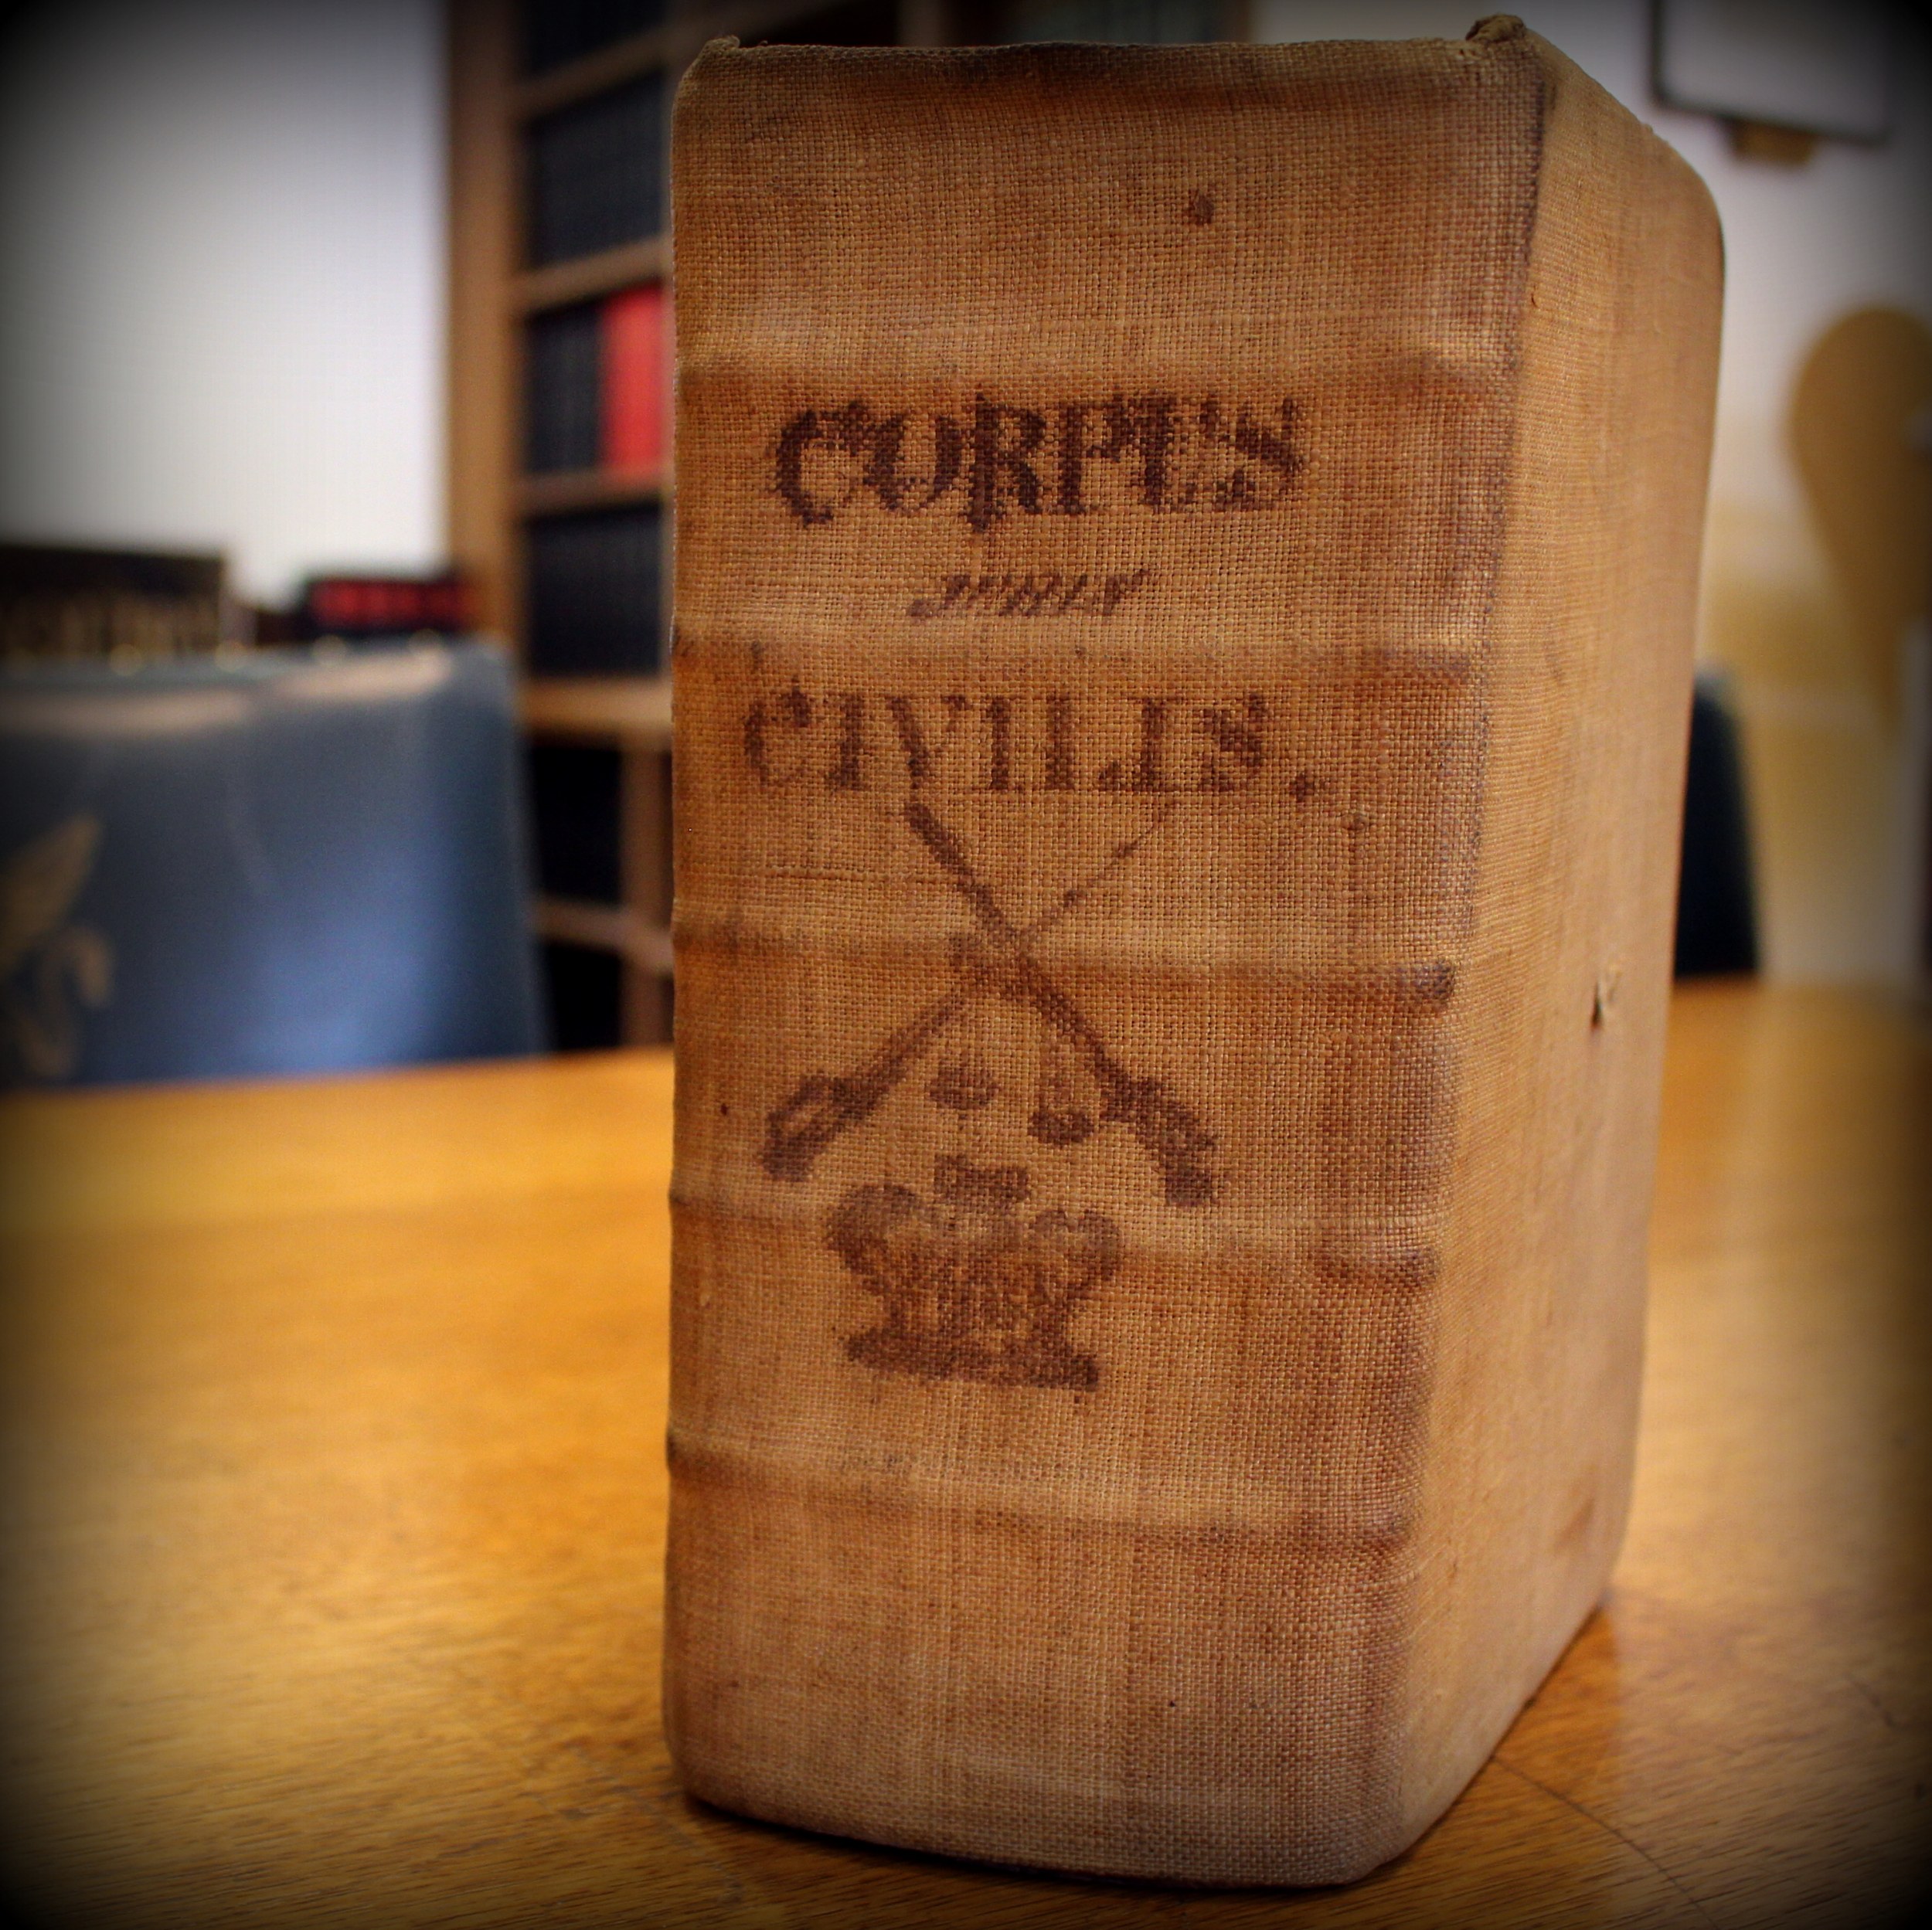 The Corpus Juris Civilis ("Body of Civil Law")